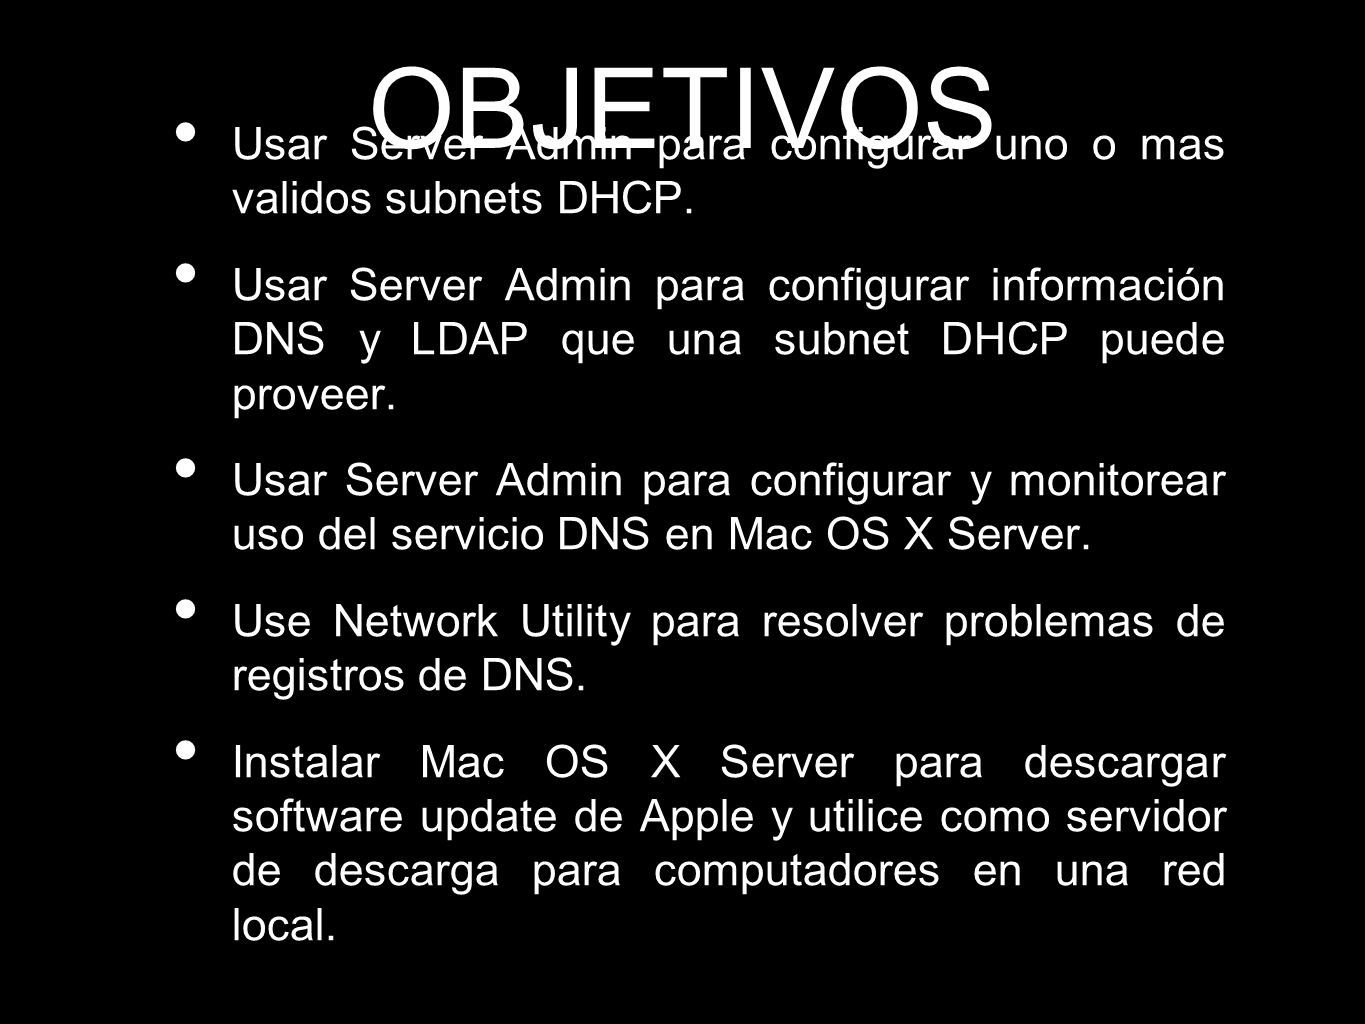 OBJETIVOS Usar Server Admin para configurar uno o mas validos subnets DHCP.